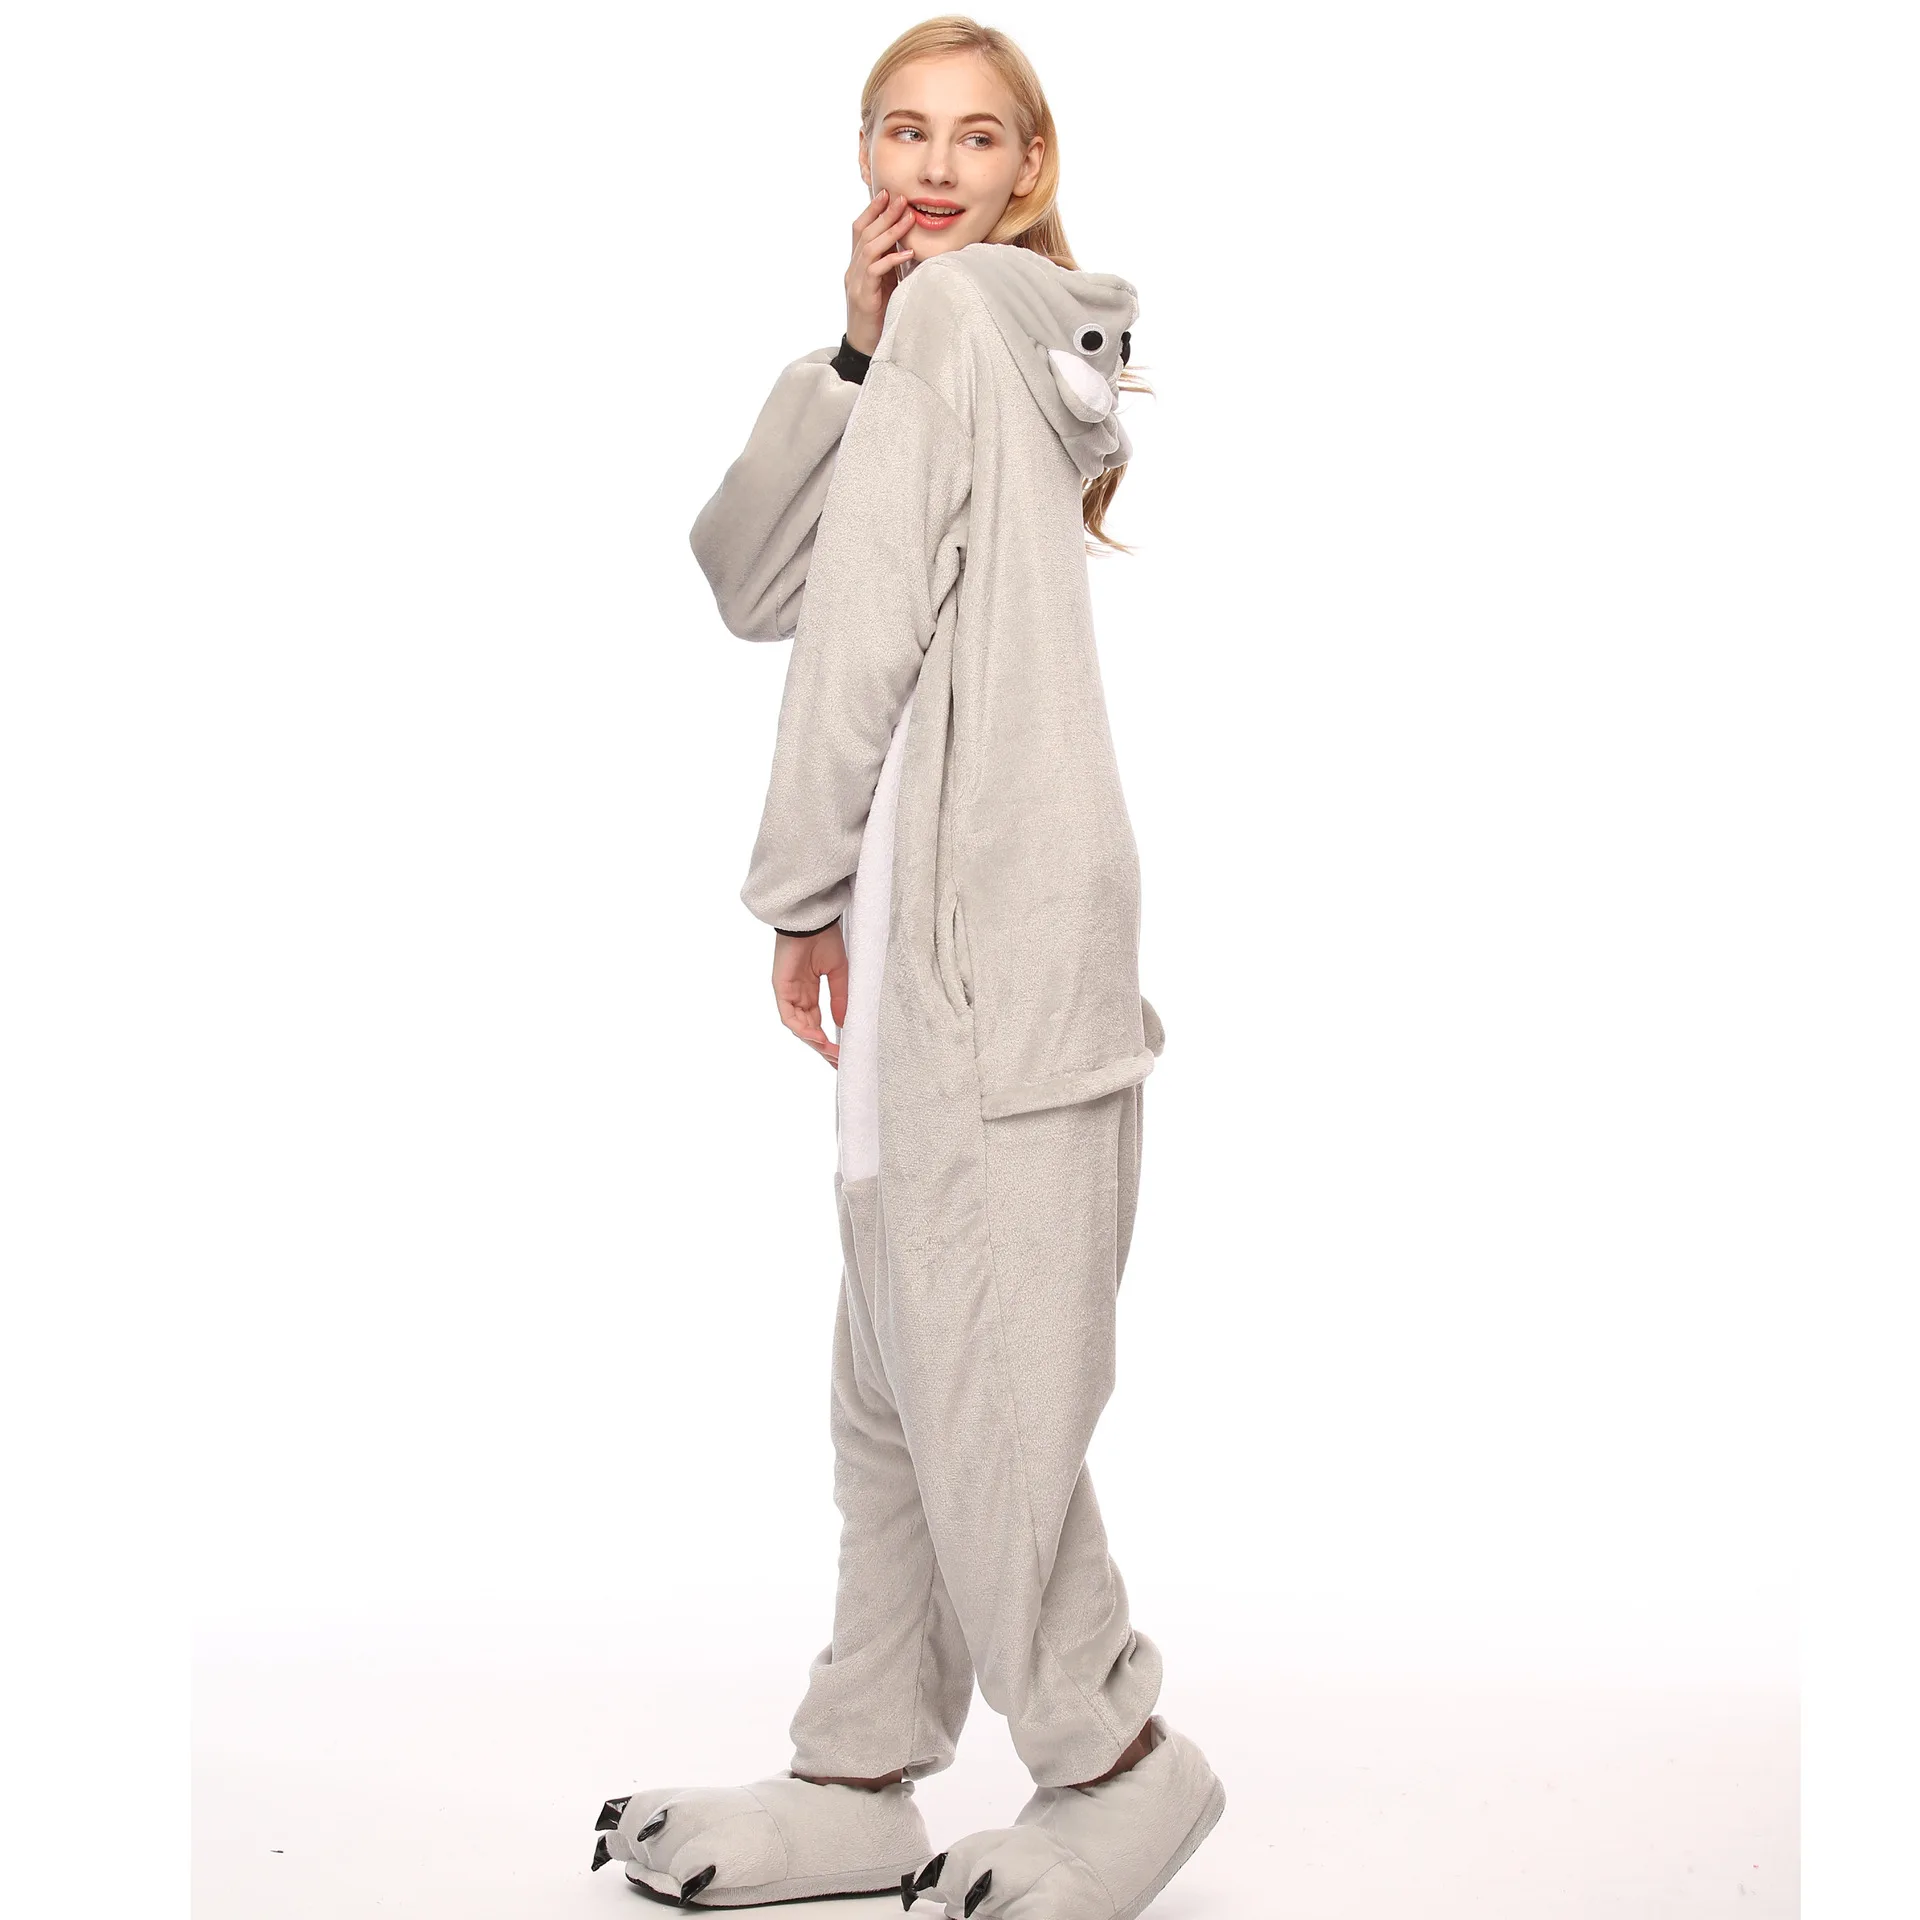 New Adults Animal Pajamas Cartoon Sleepwear Koala Pajamas Sets Anime Kigurumi Women Men Warm Flannel Hooded